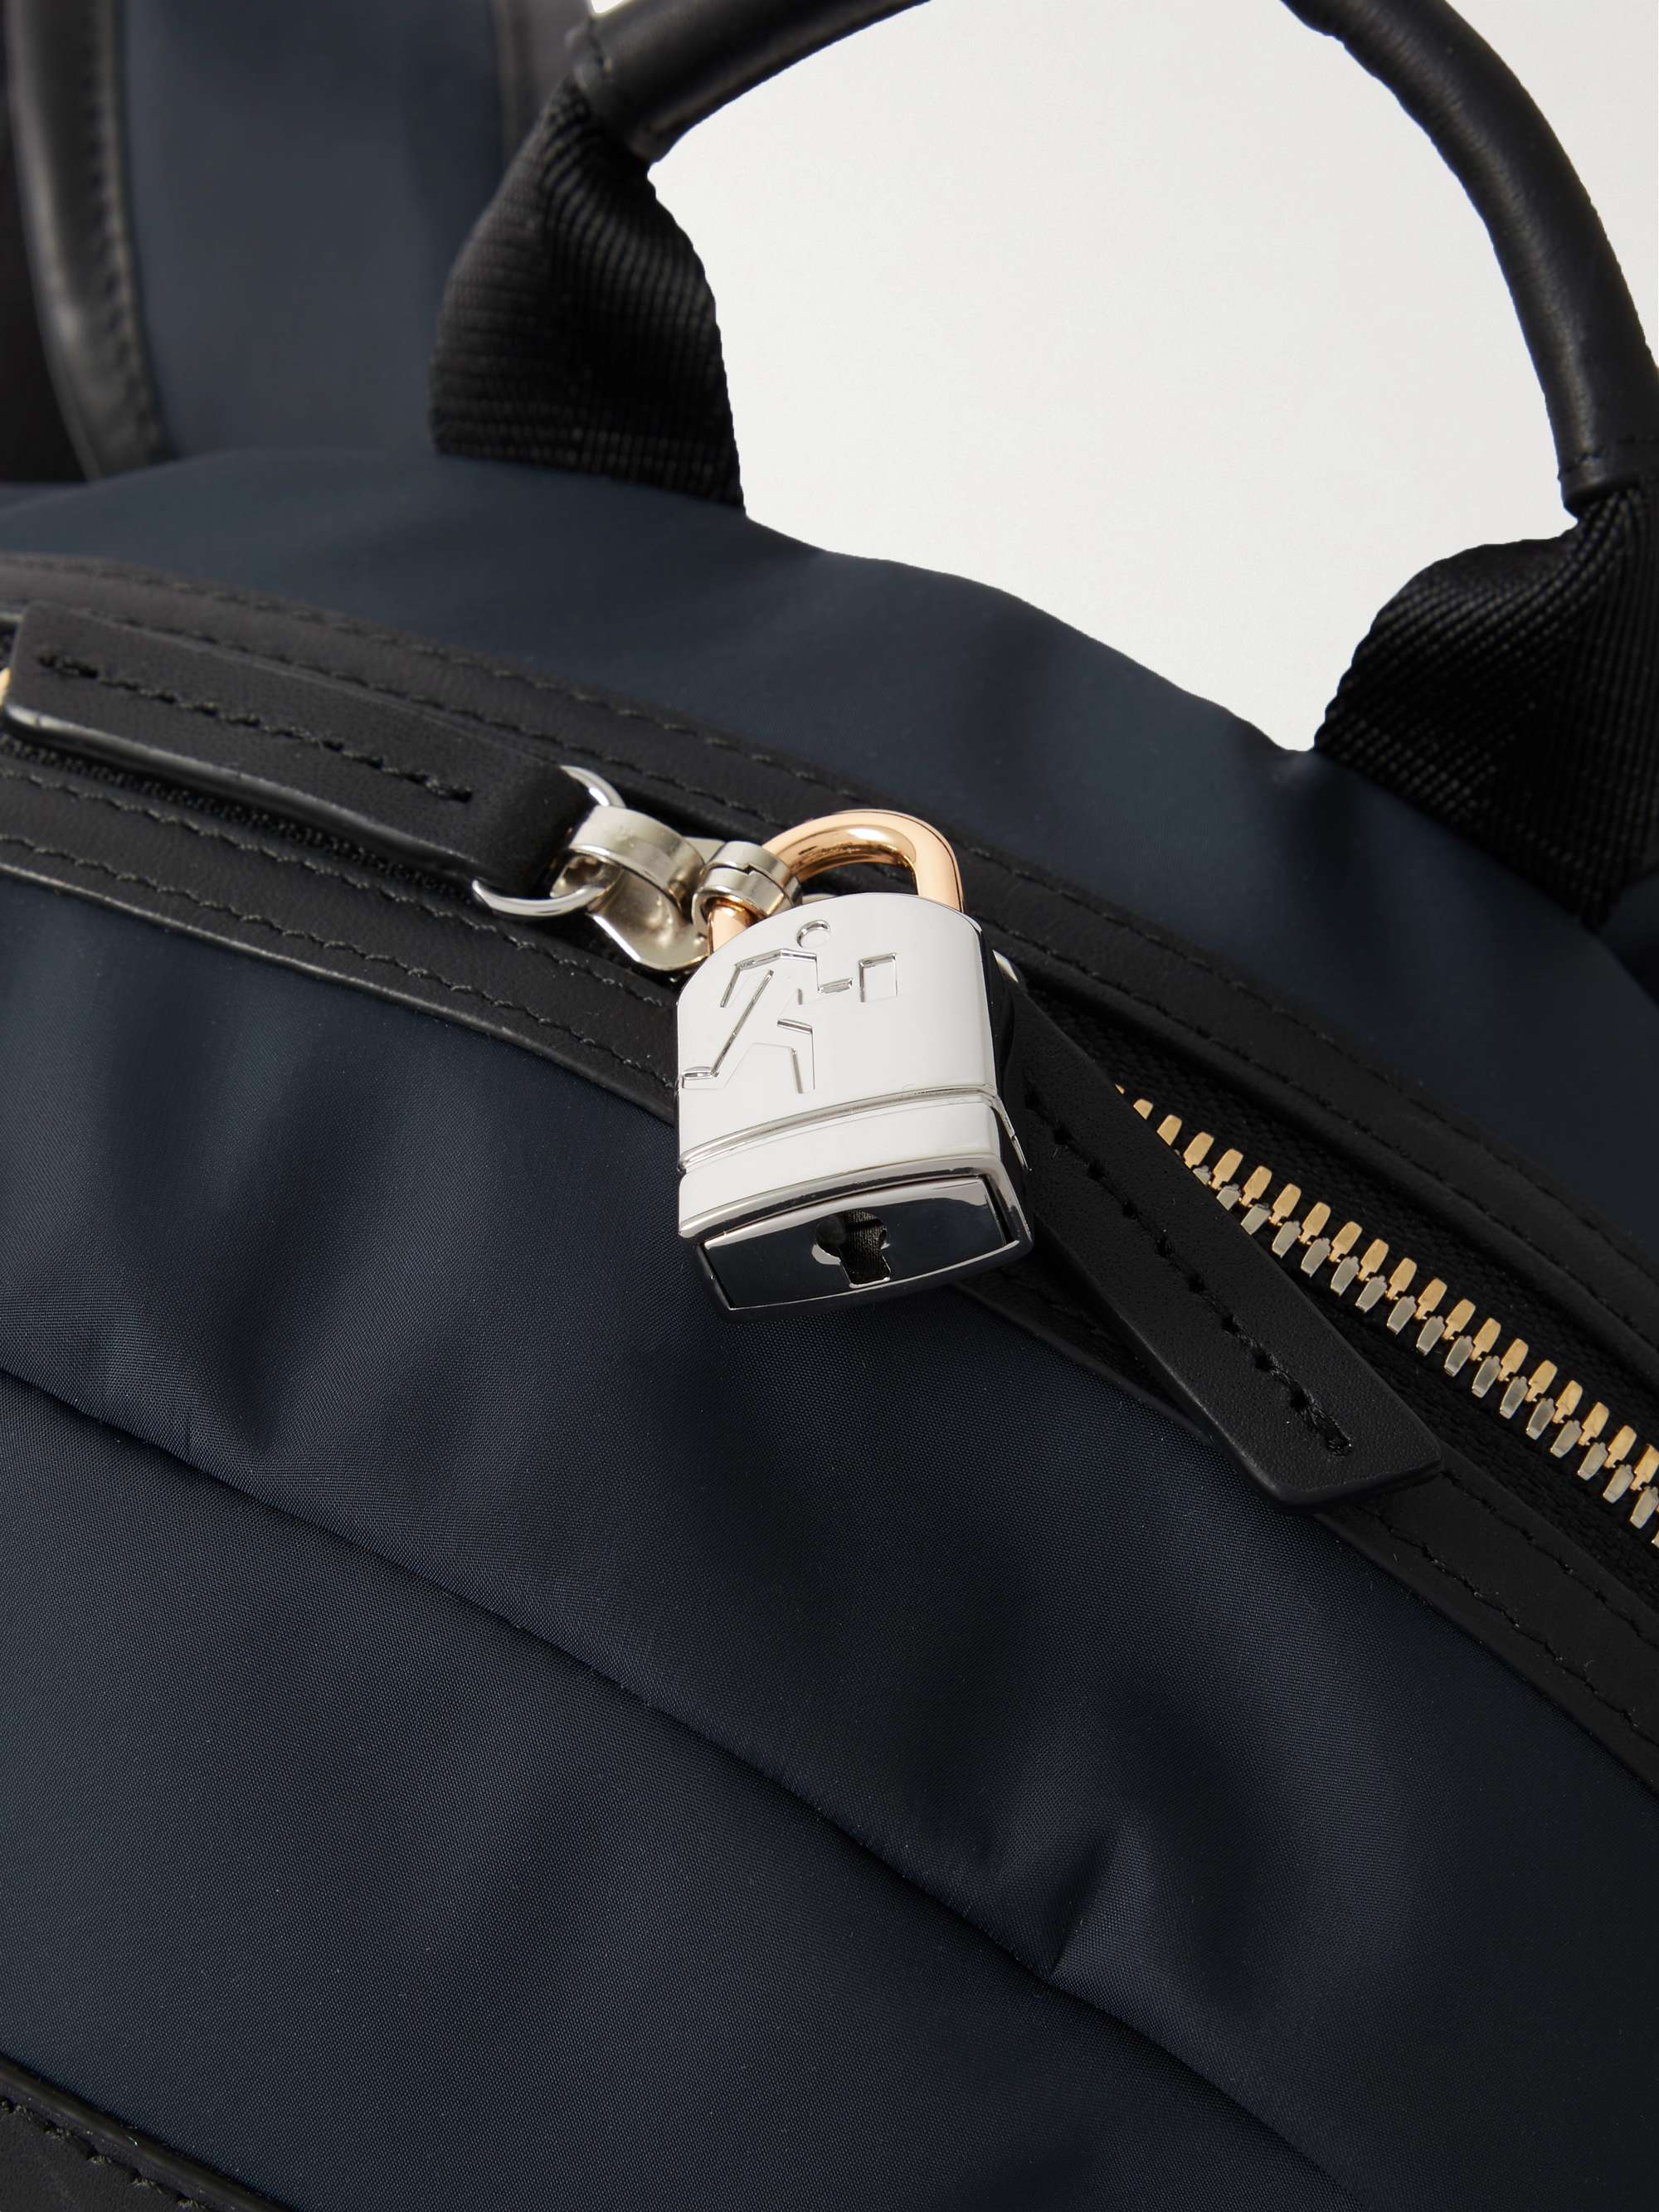 WANT LES ESSENTIELS Kastrup 2.0 Leather-Trimmed Nylon Backpack